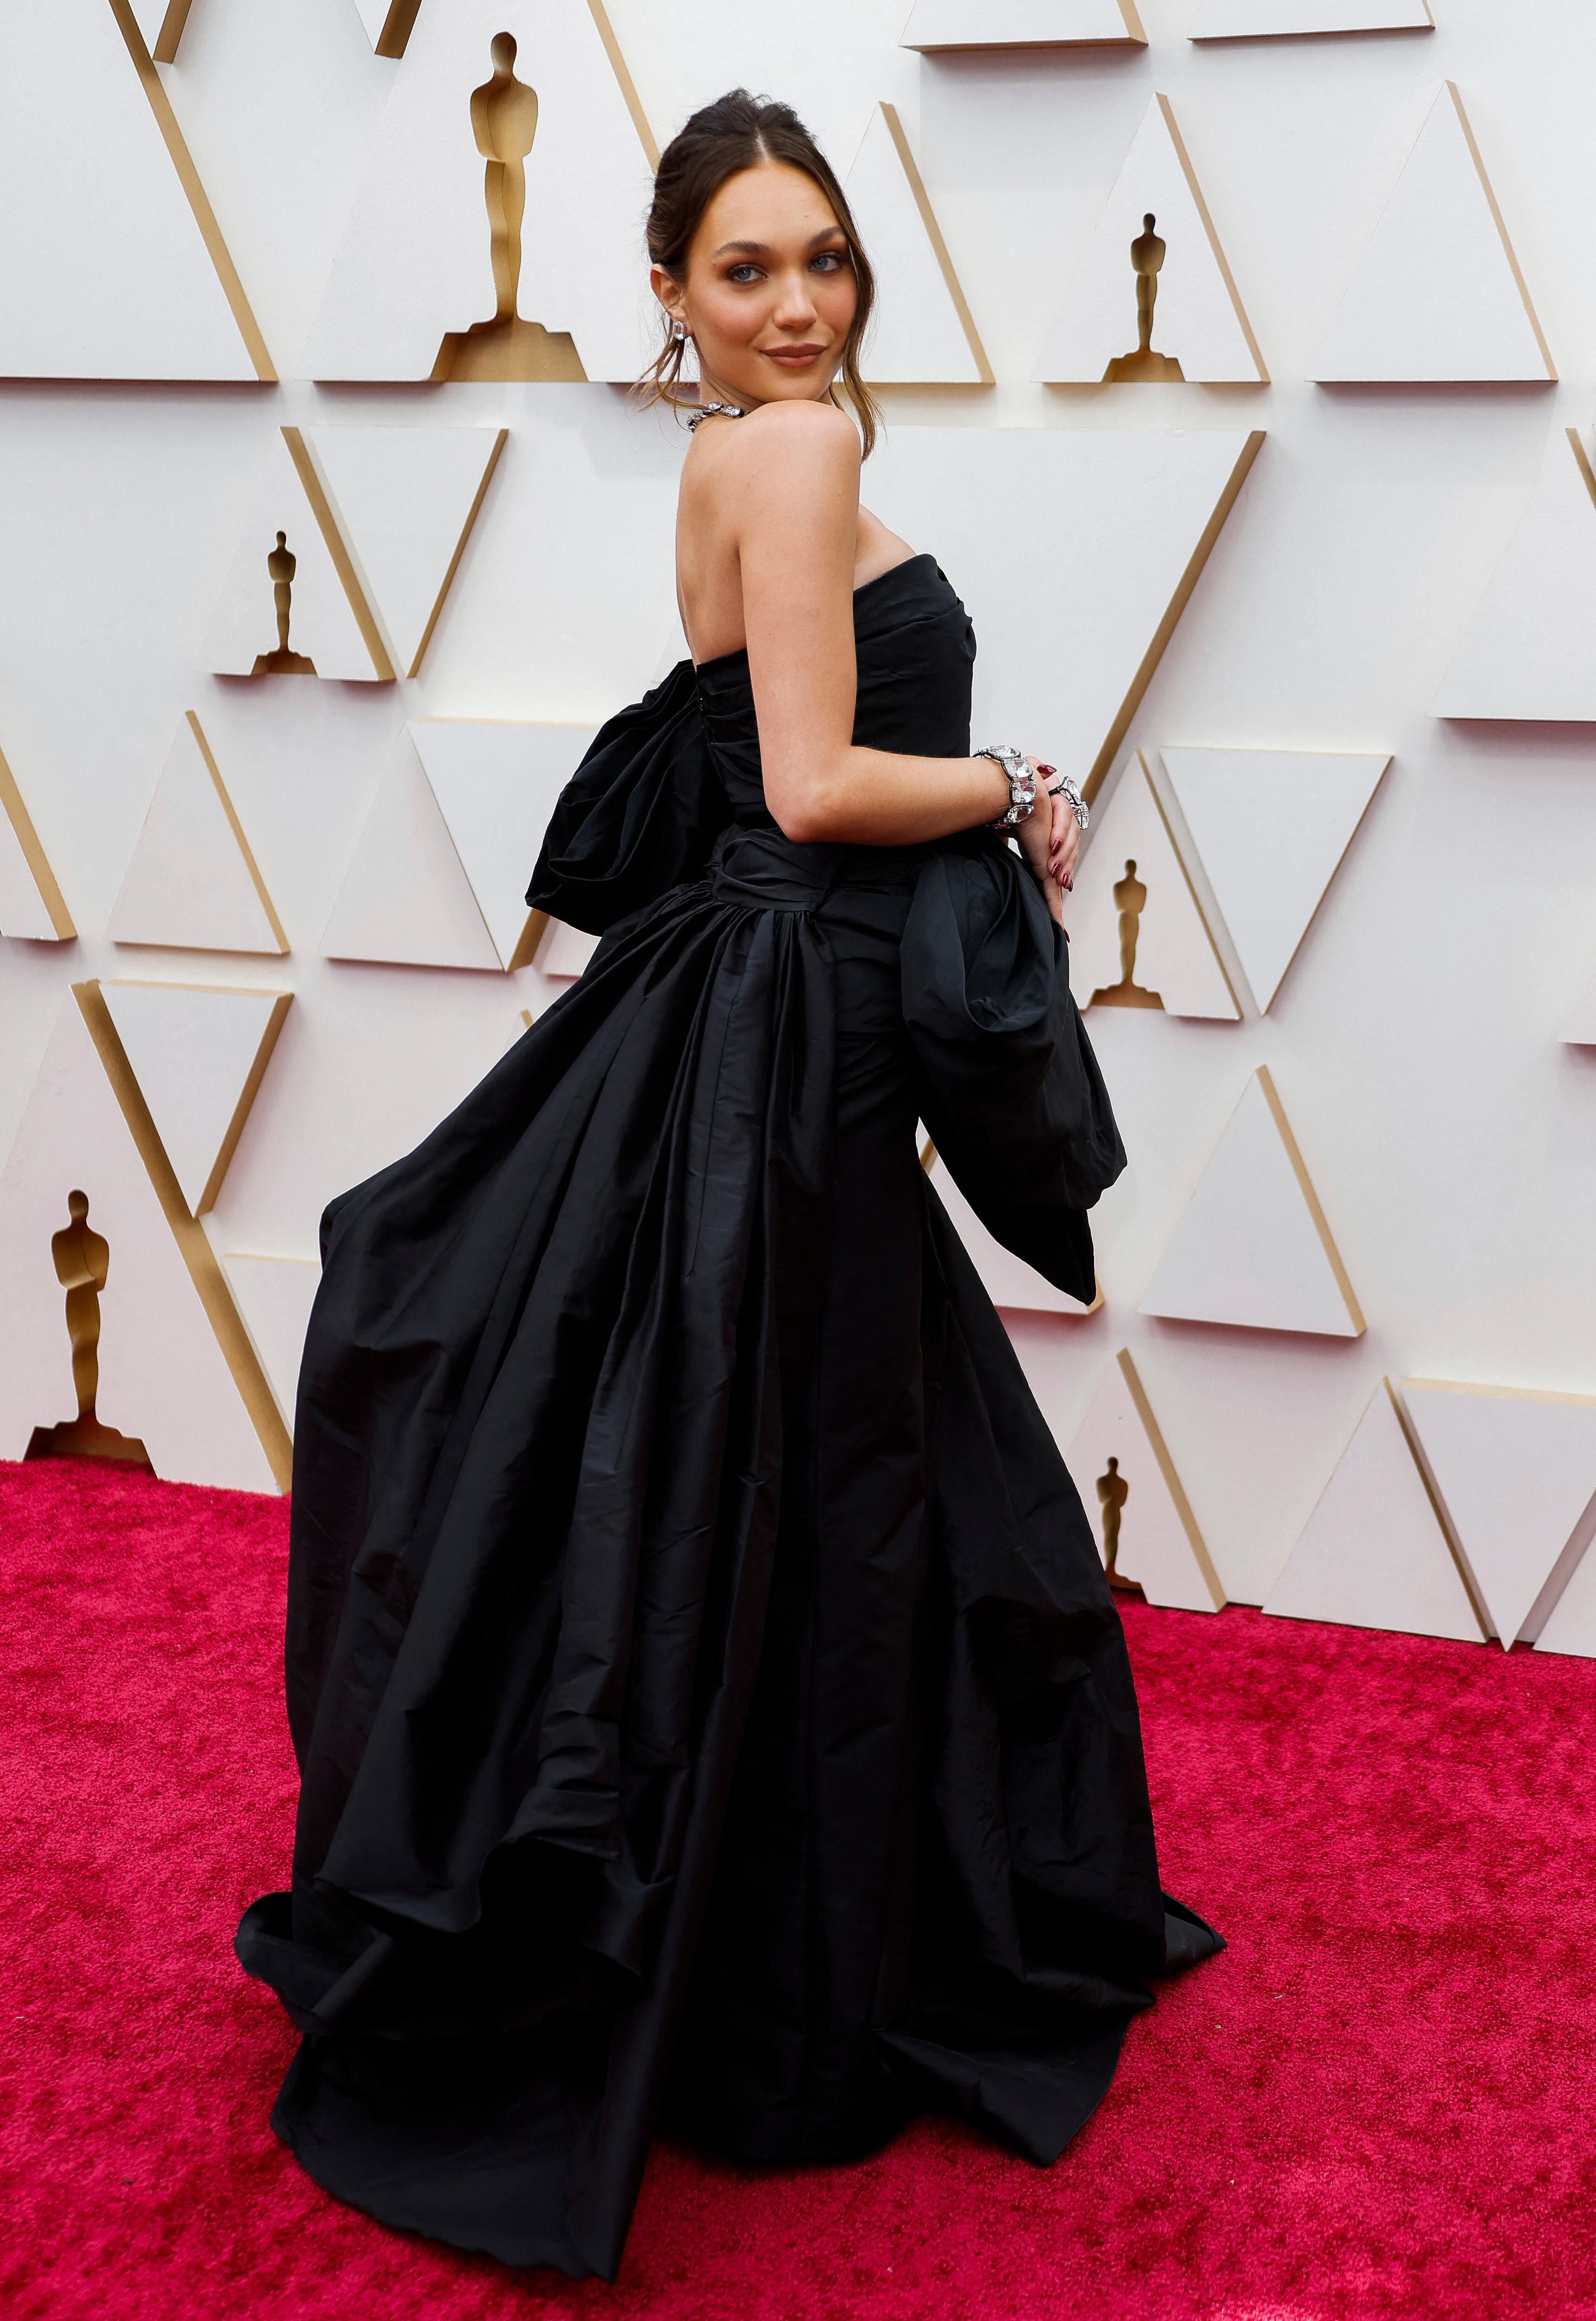 Oscars red carpet 2022: All looks, fashion, dresses on Nicole Kidman, Jada  Pinkett Smith, Kristen Stewart, more at Academy Awards - ABC7 Los Angeles